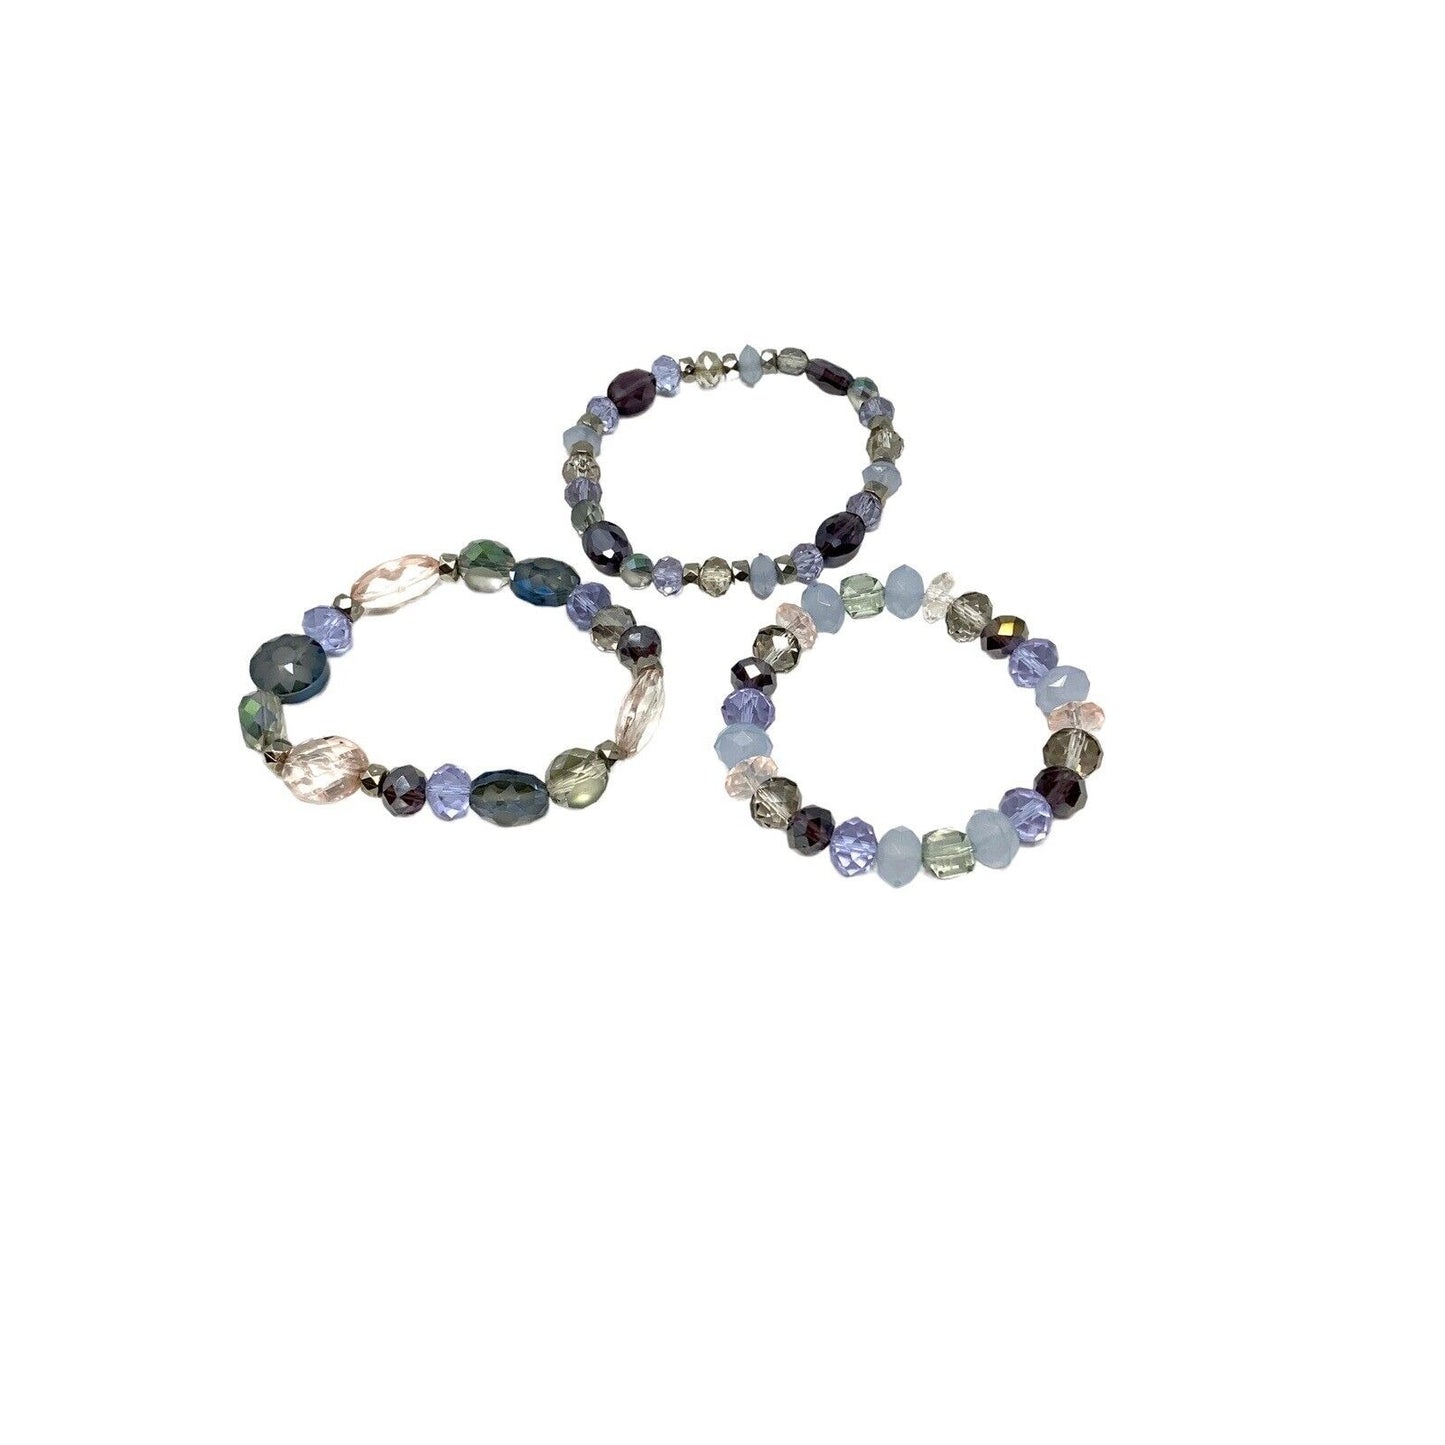 Three Separate Strand Colored Beaded Bracelet